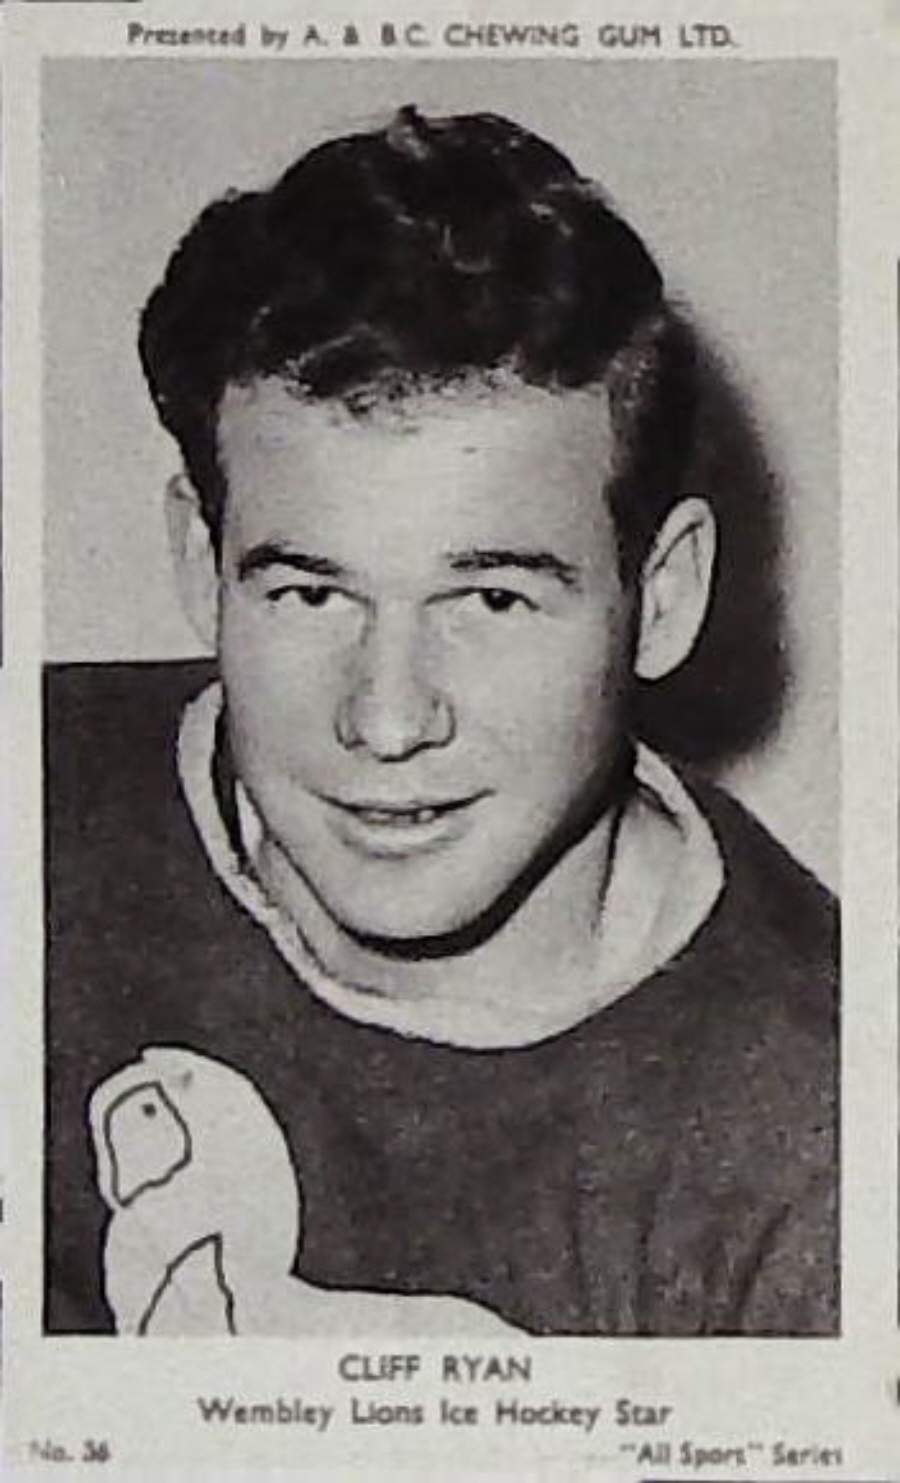 A & B C 1954 All Sports Ice Hockey Cliff Ryan No 36